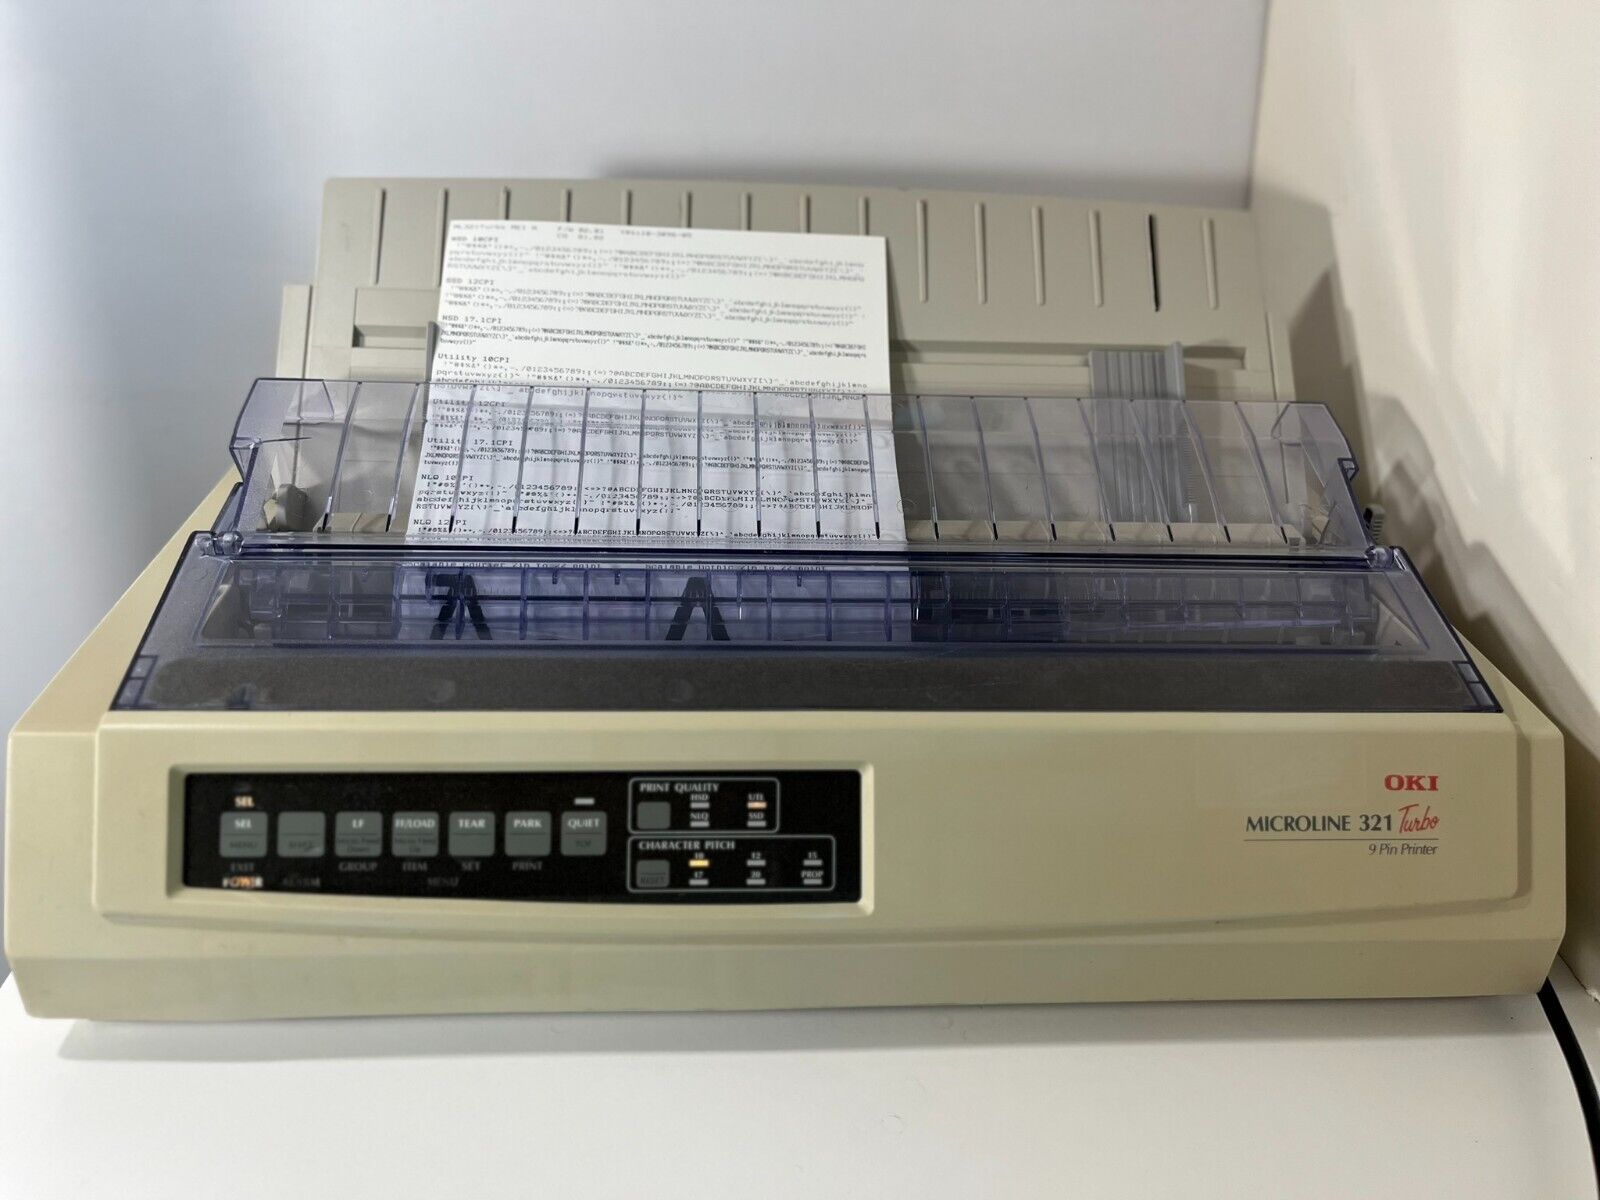 OKI MICROLINE 321 Turbo Printer RECONDITIONED/TESTED/WORKING OKIDATA